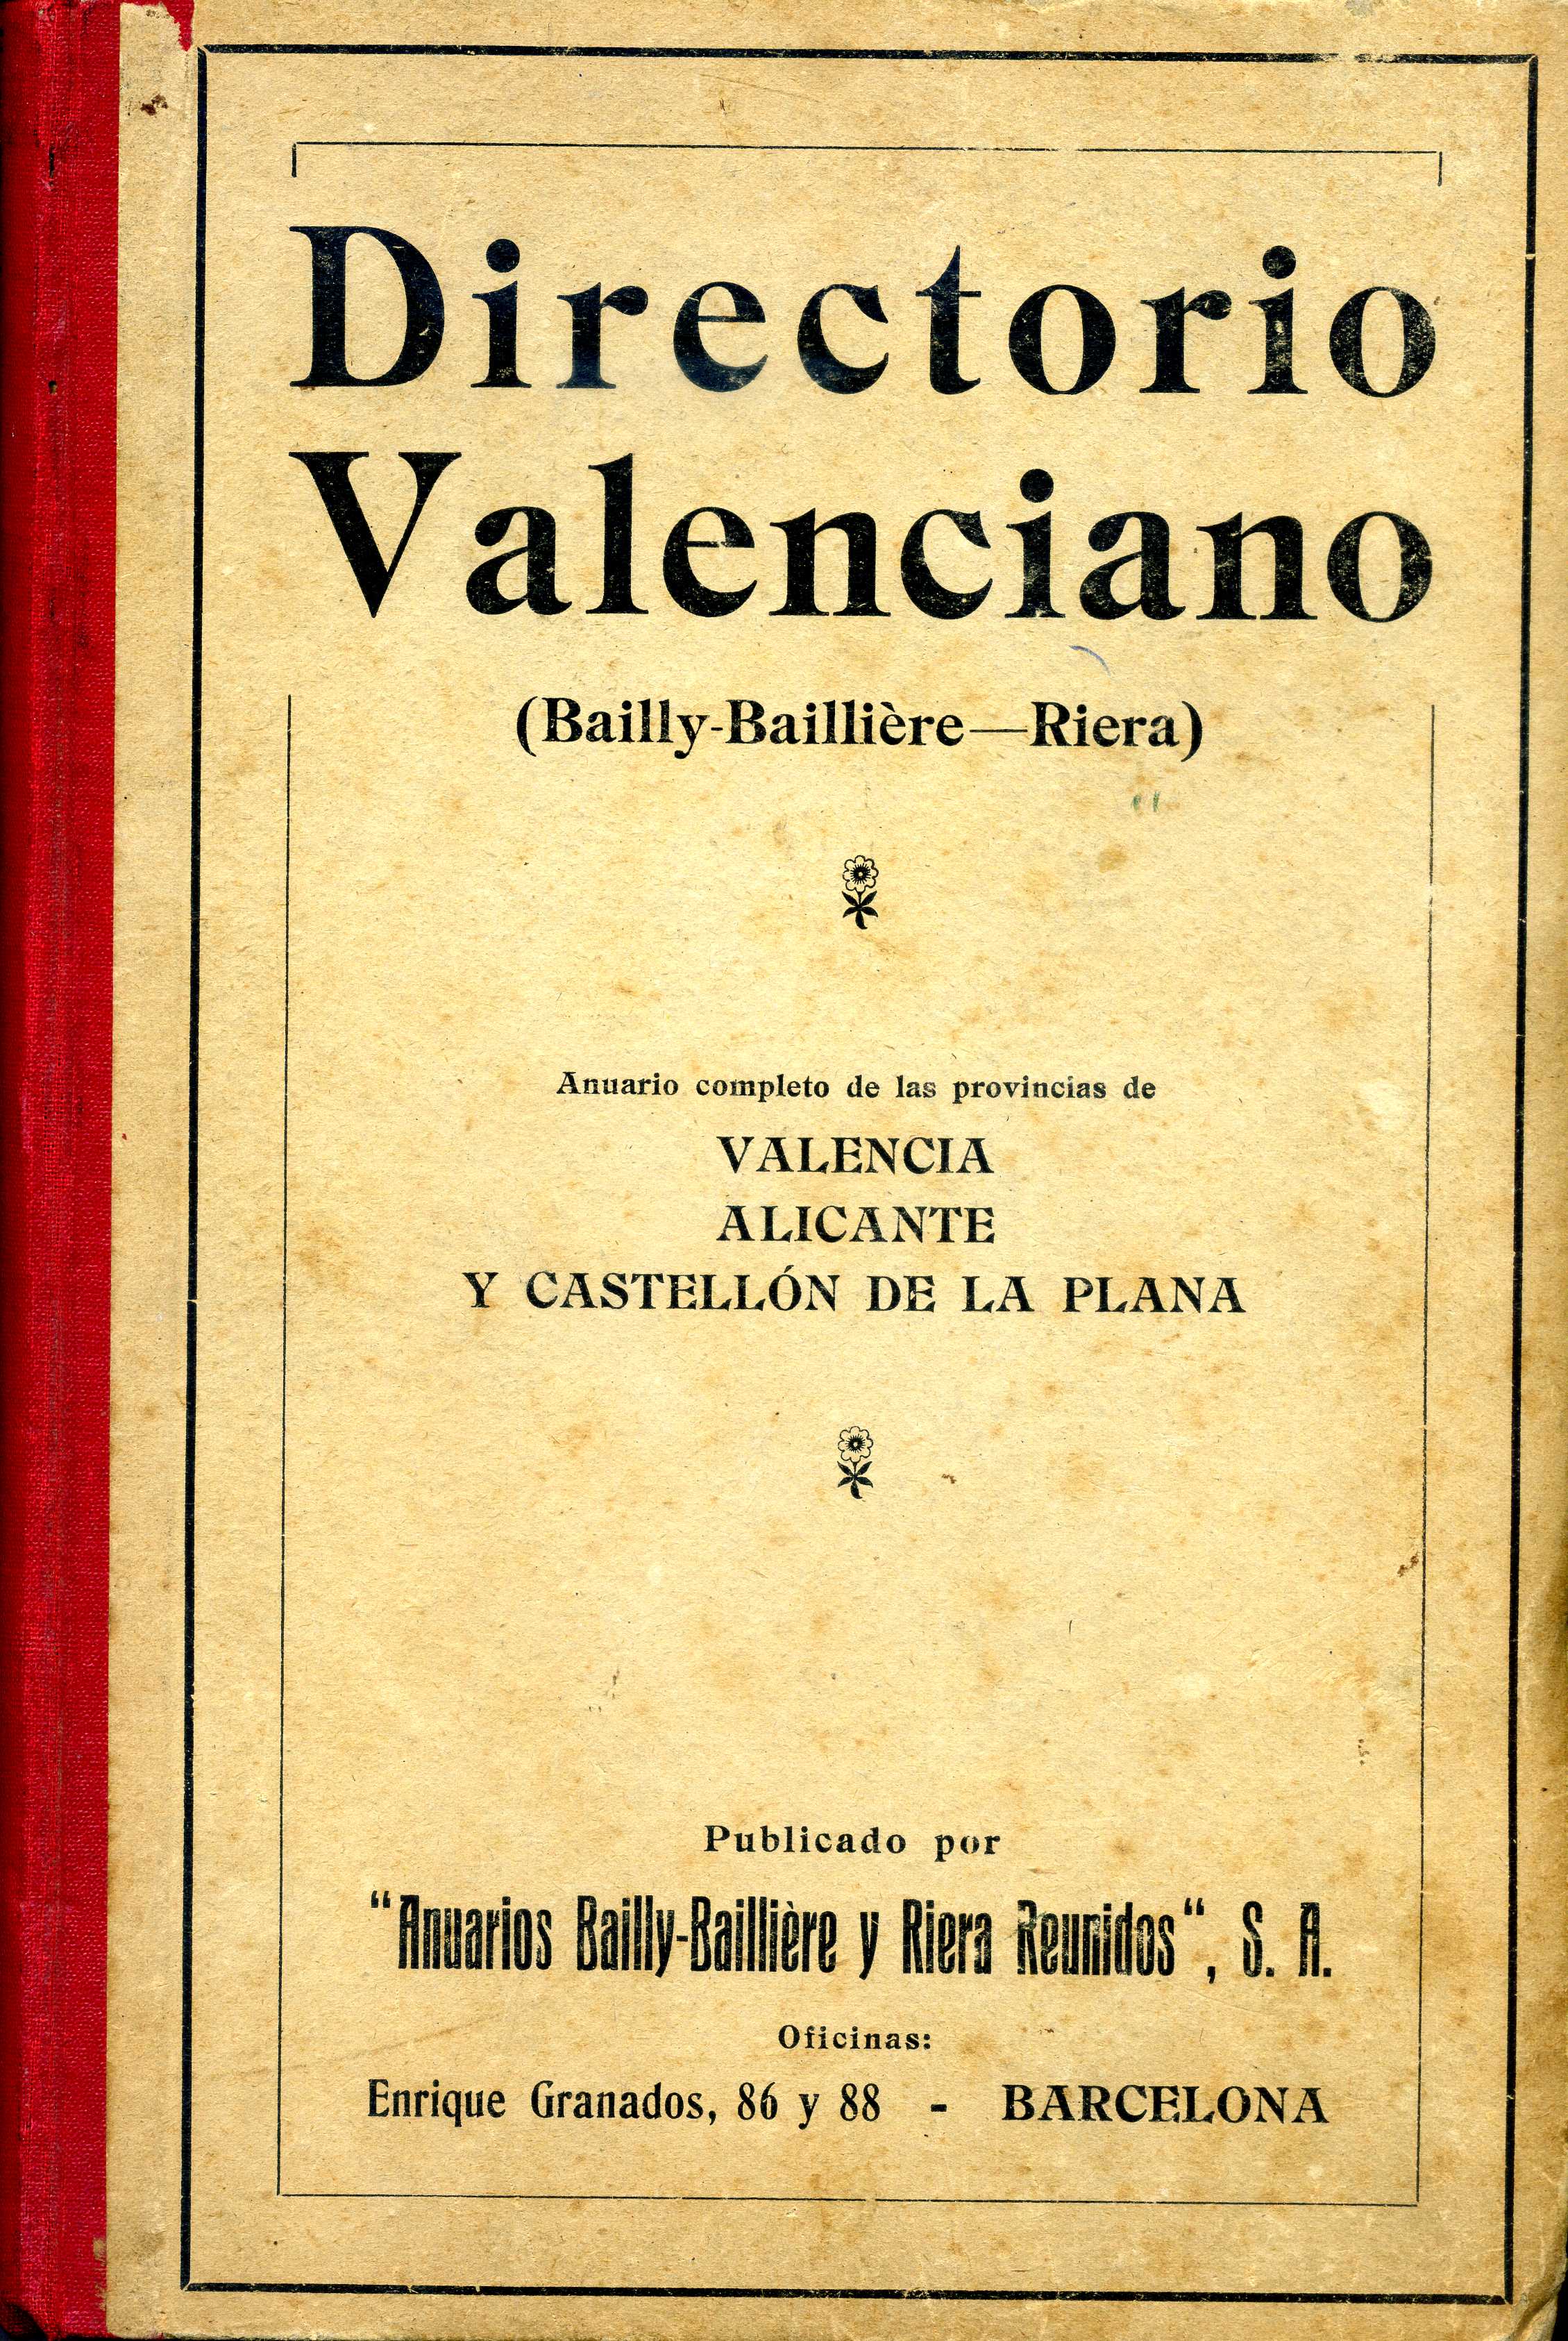 Directorio Valenciano (Bailly-Baillière-Riera 1944)